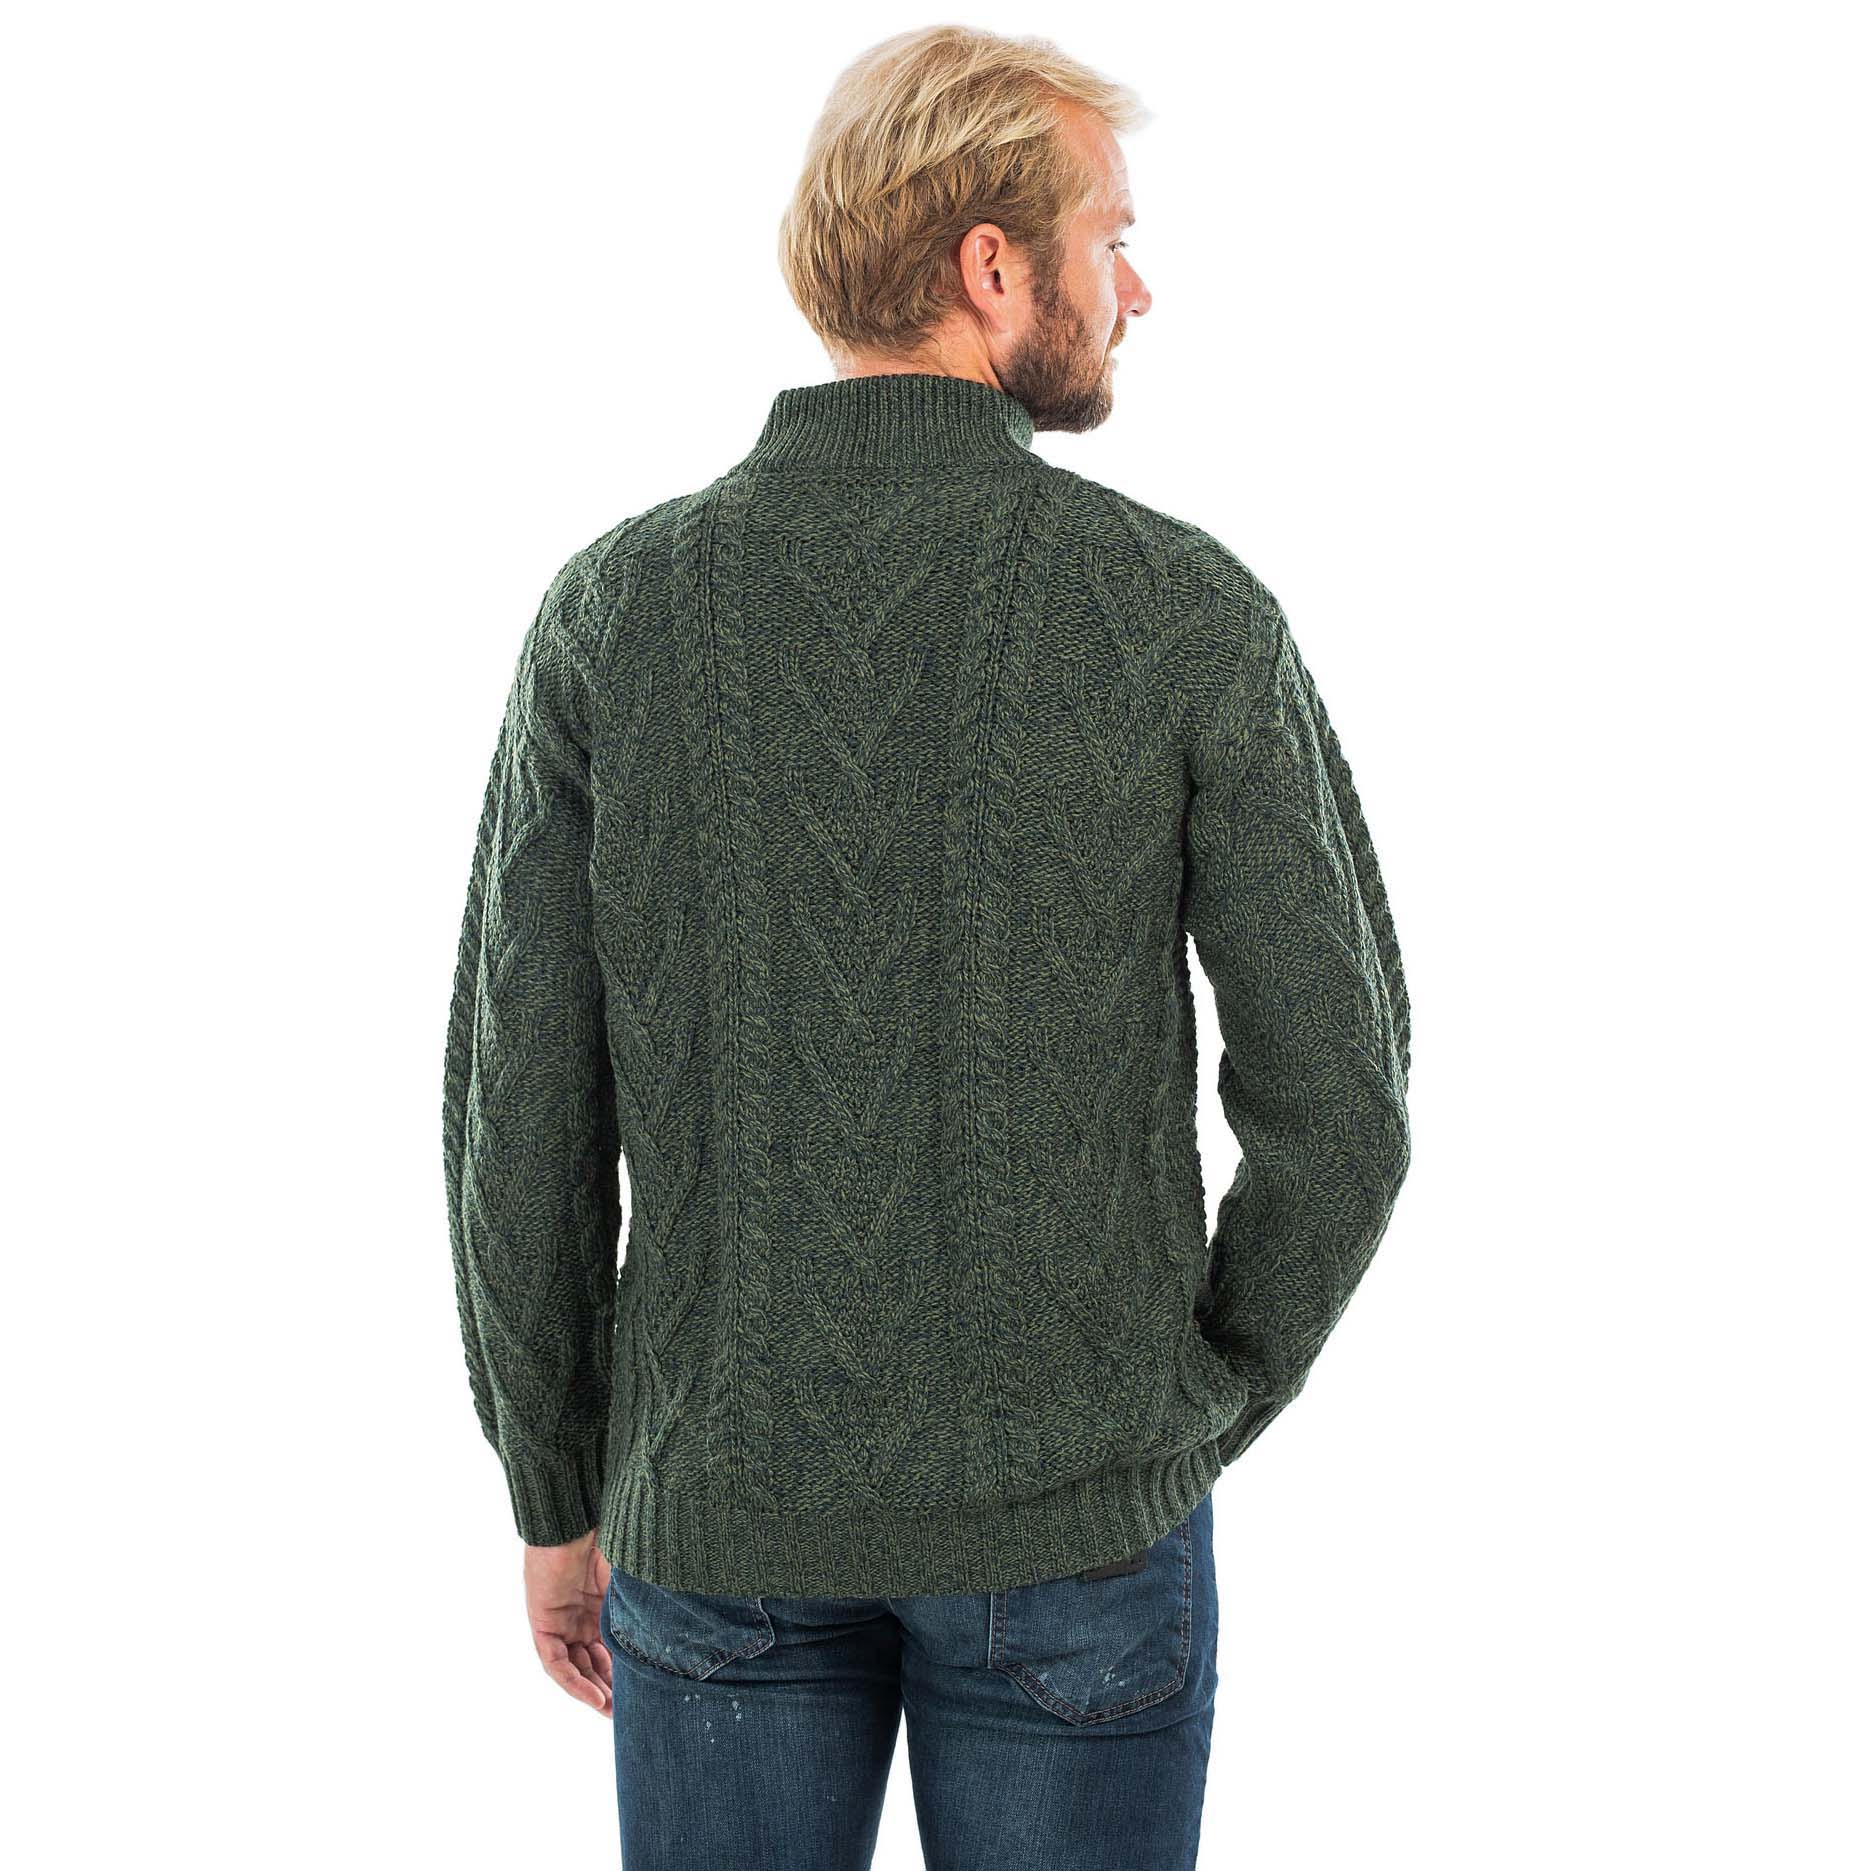 Irish Sweater, Merino Wool Aran Knit Zip Neck Fisherman Mens Sweater at